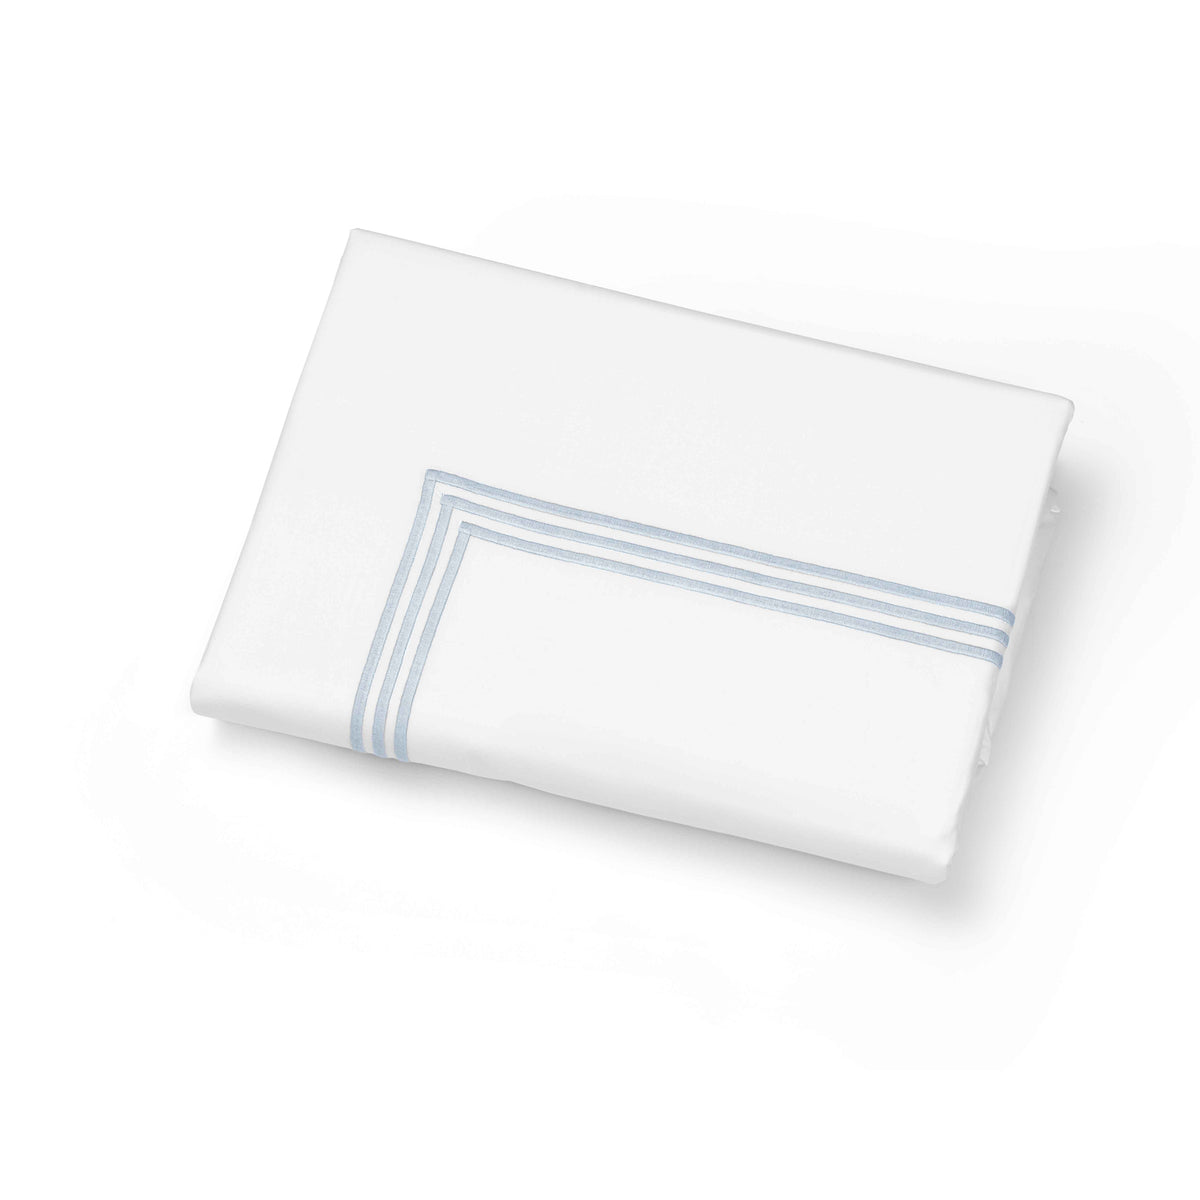 Folded Duvet Cover of Signoria Platinum Percale Bedding in White/Sky Blue Color